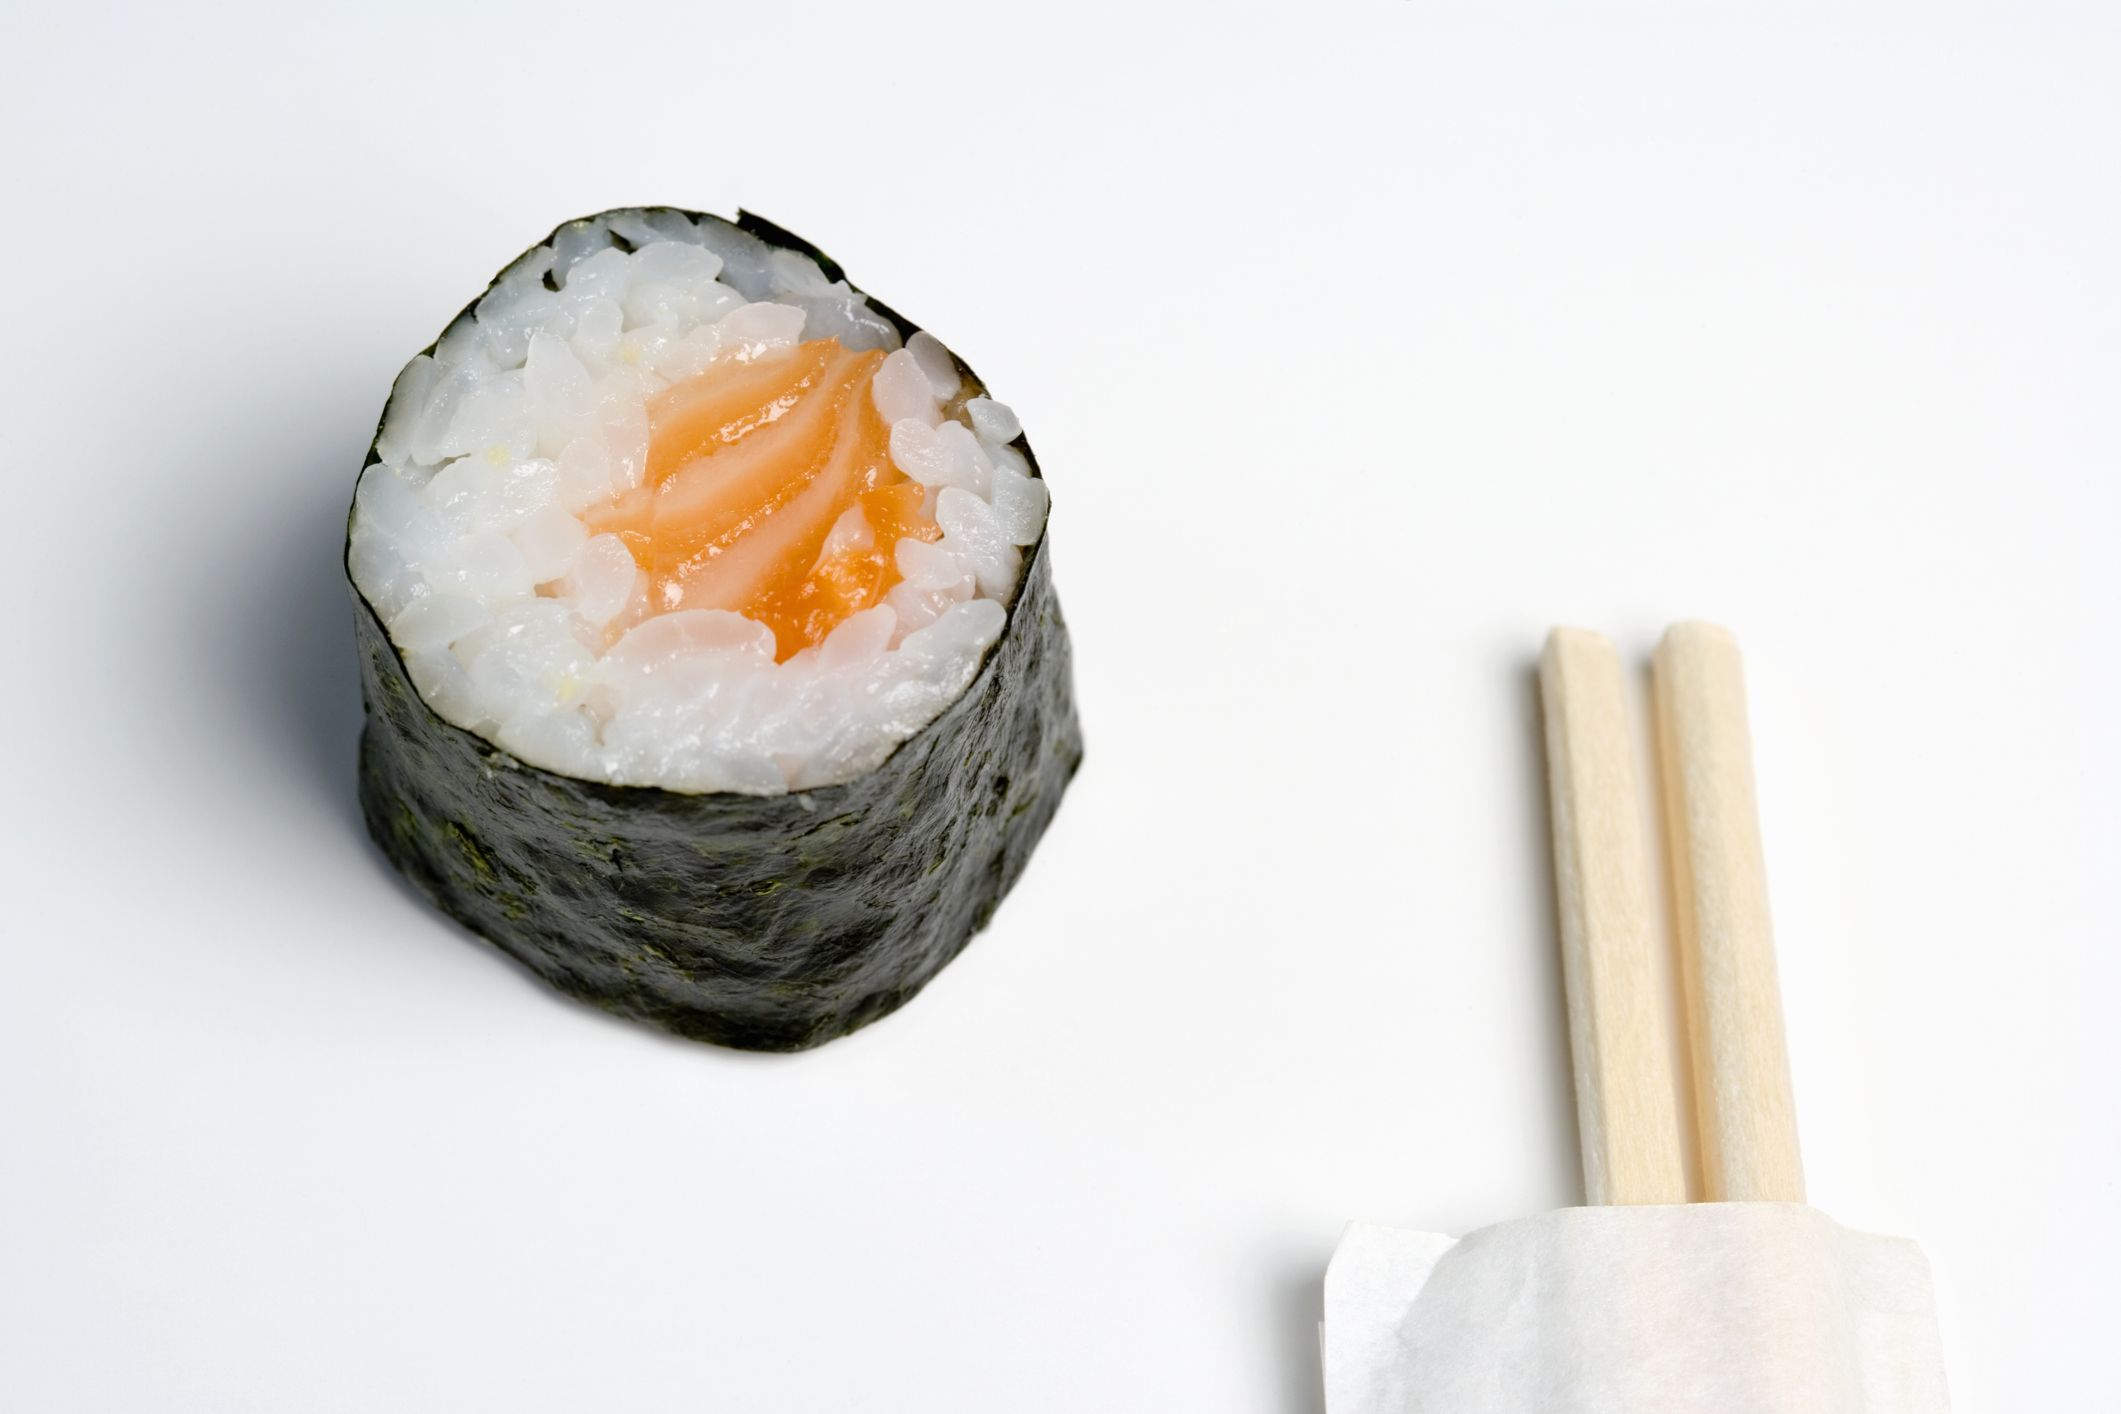 Wooden chopsticks next to salmon sushi piece